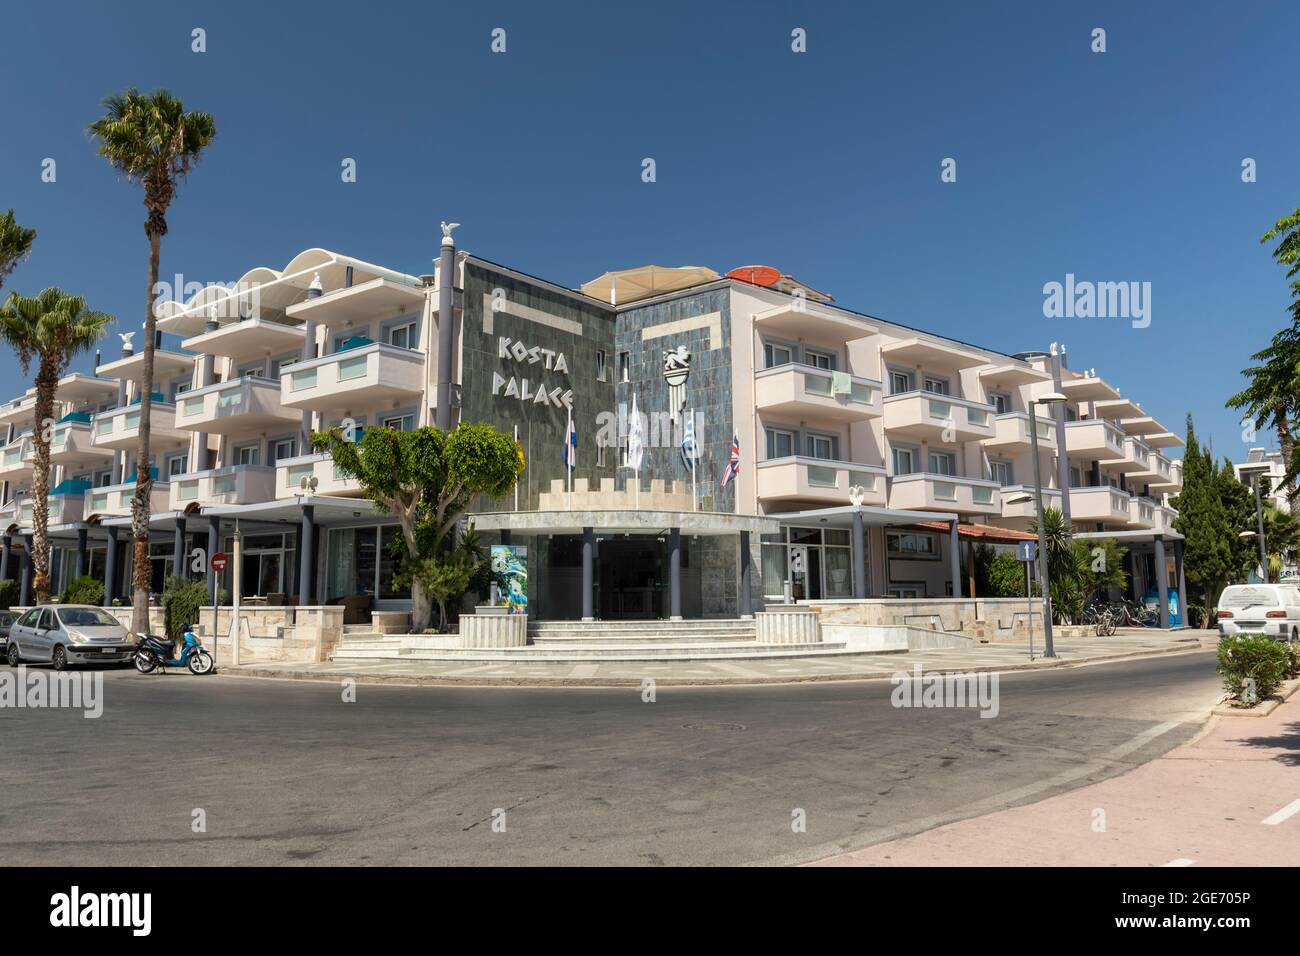 The Kosta Palace Hotel in Kos Town, Kos, Dodecanese Island, Greece Stock Photo